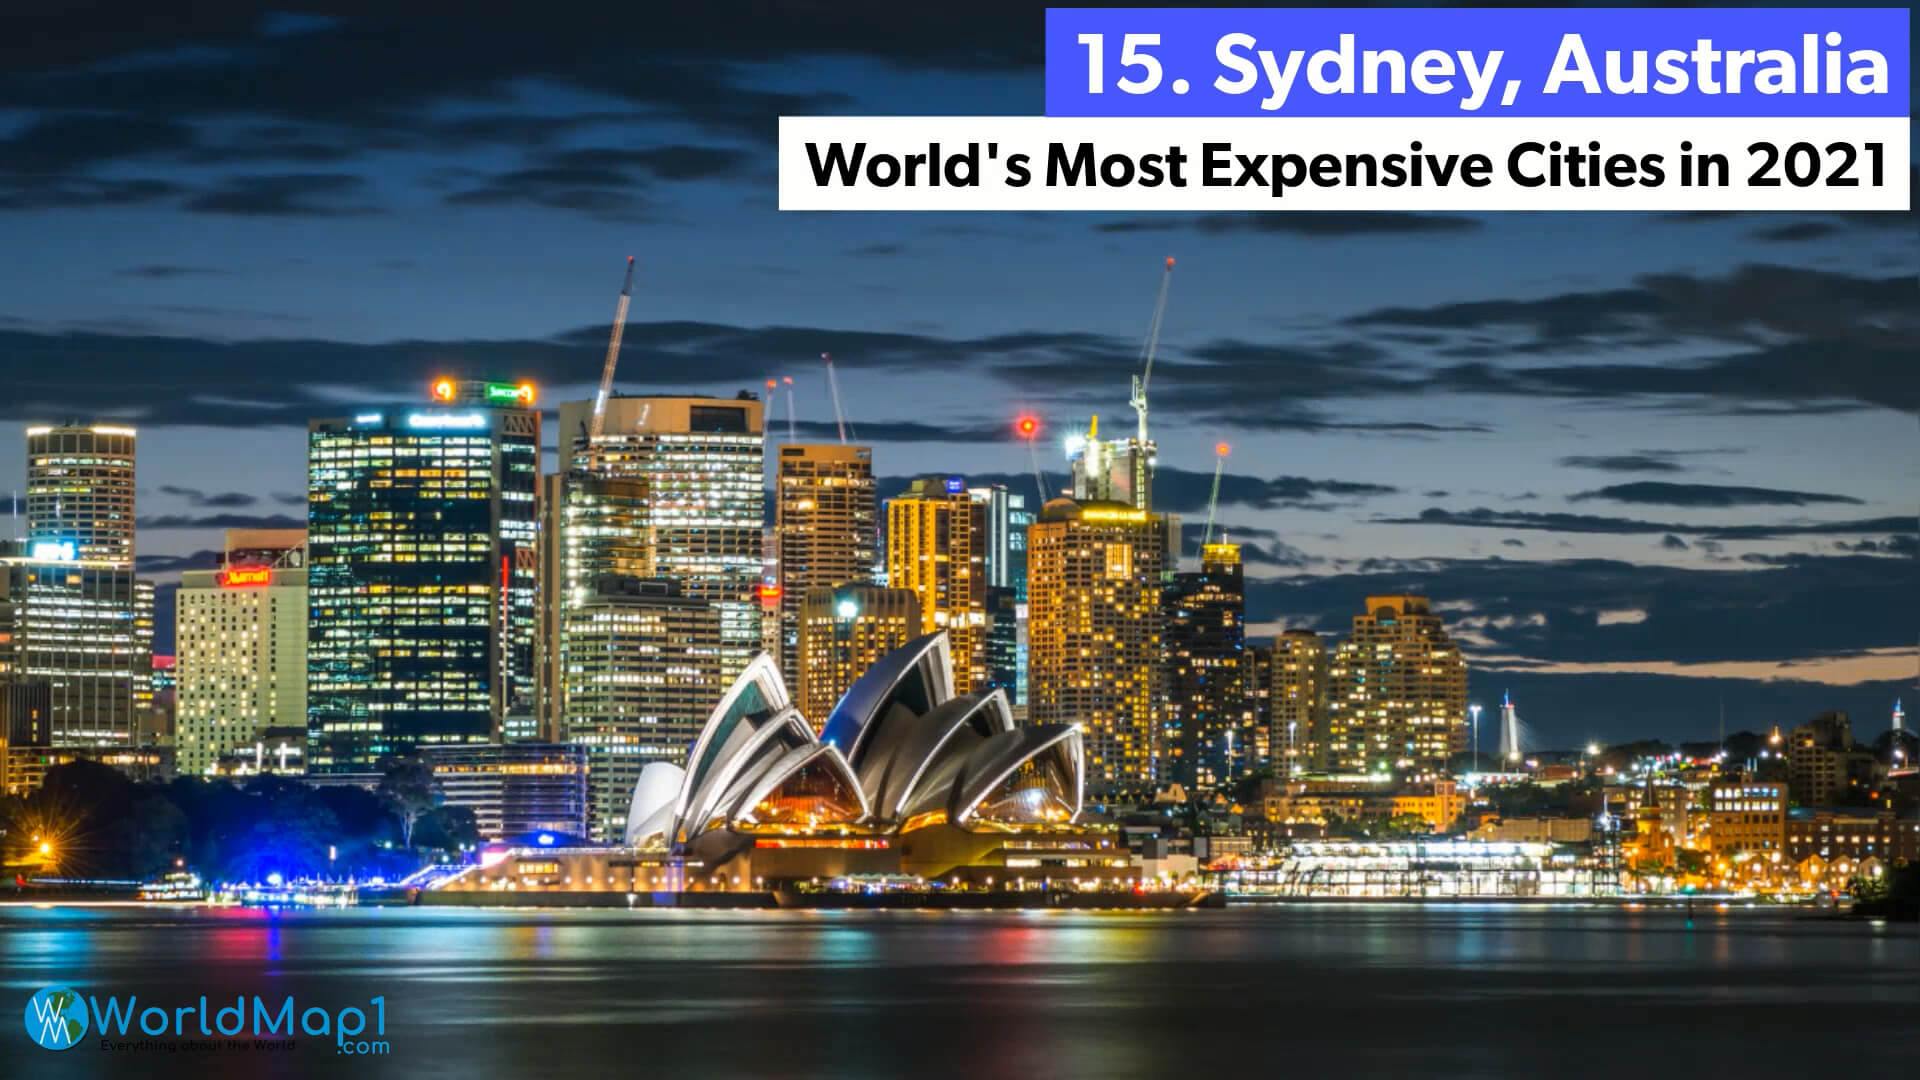 World's Most Expensive Cities - Sydney, Australia